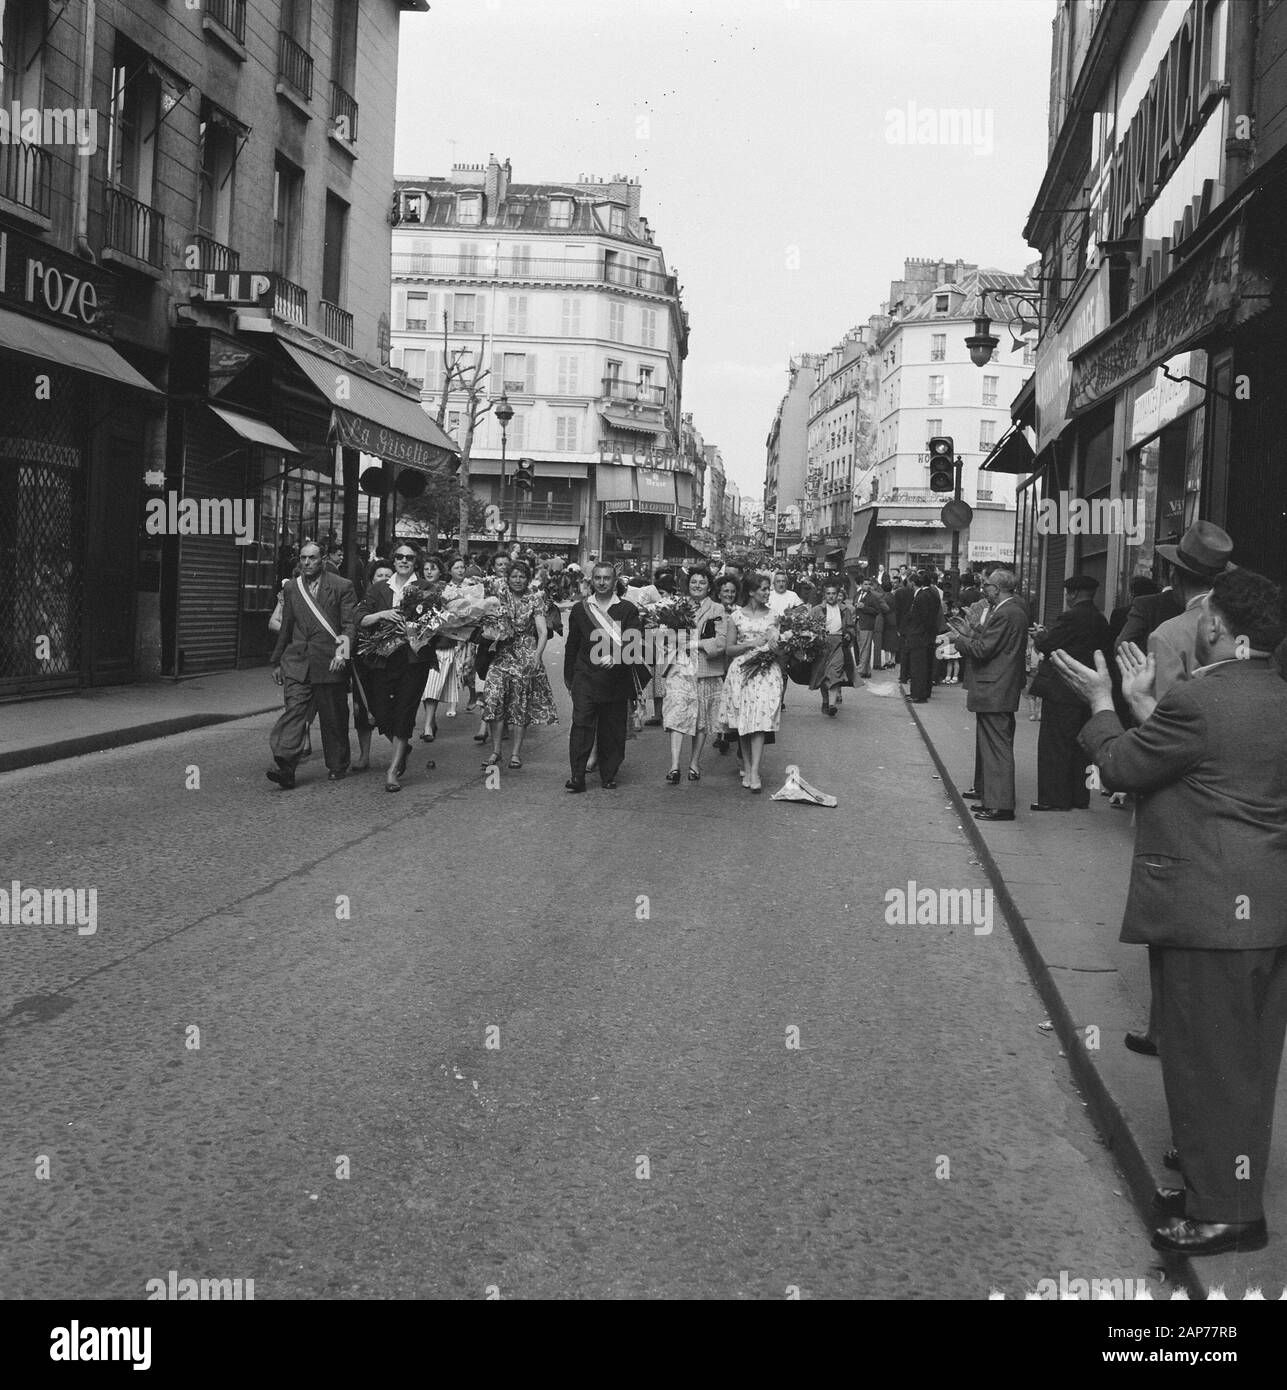 Demonstrations in Paris for De Gaulle Date: June 1, 1958 Location: France, Paris Keywords: Demonstrations Personal name: Gaulle, Charles de Stock Photo